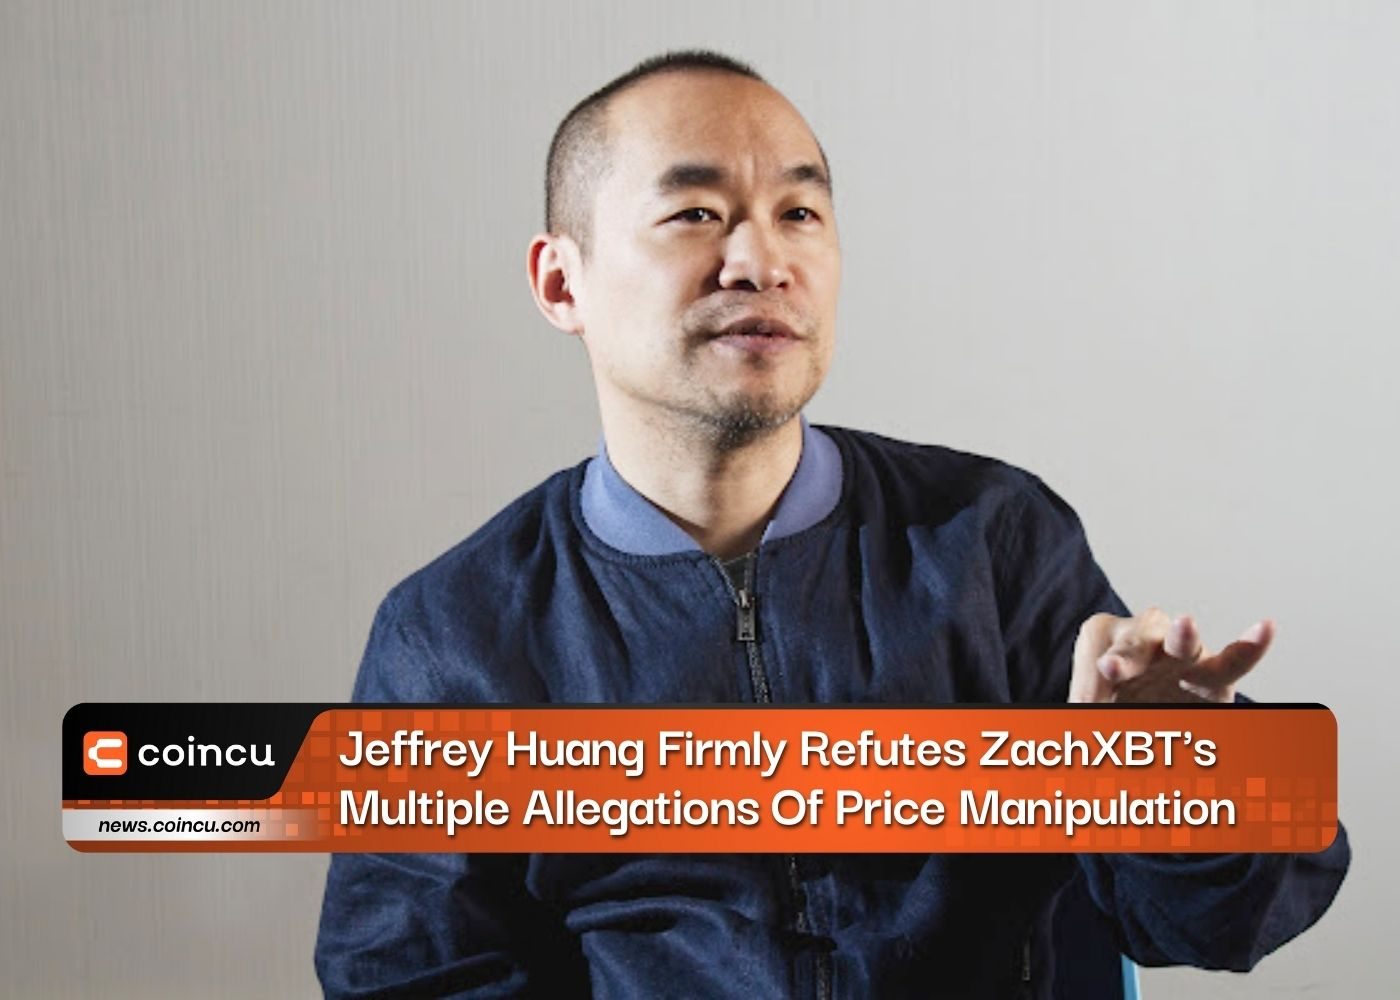 Jeffrey Huang 坚决驳斥 ZachXBT 多项价格操纵指控